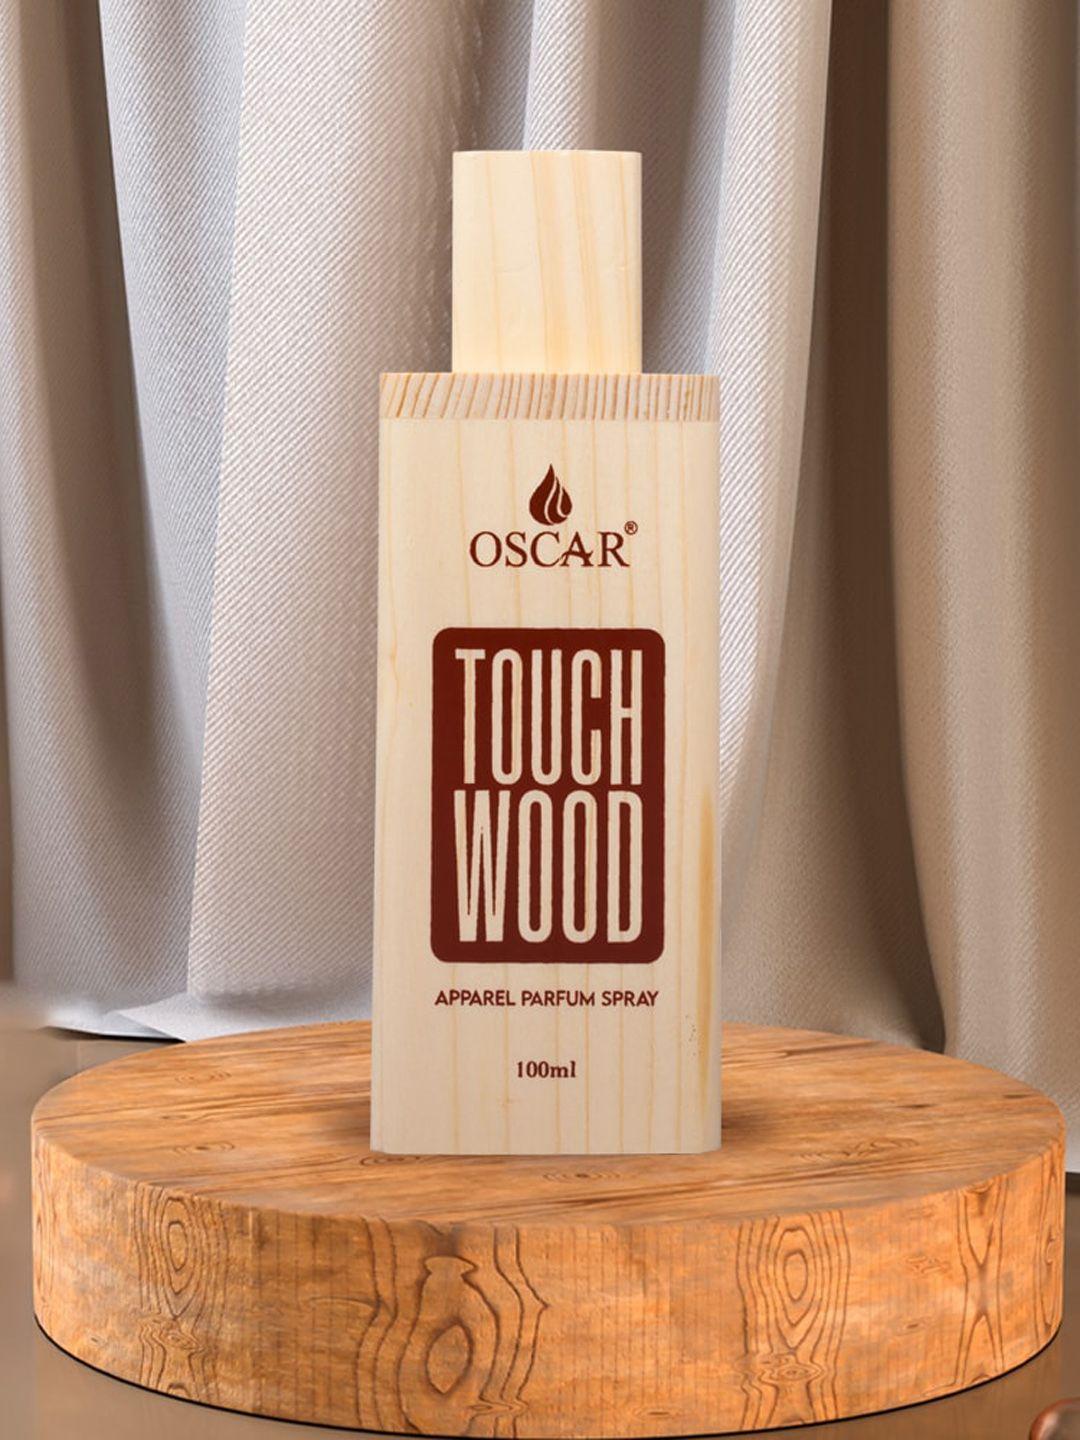 oscar touch wood apparel parfum - 100ml